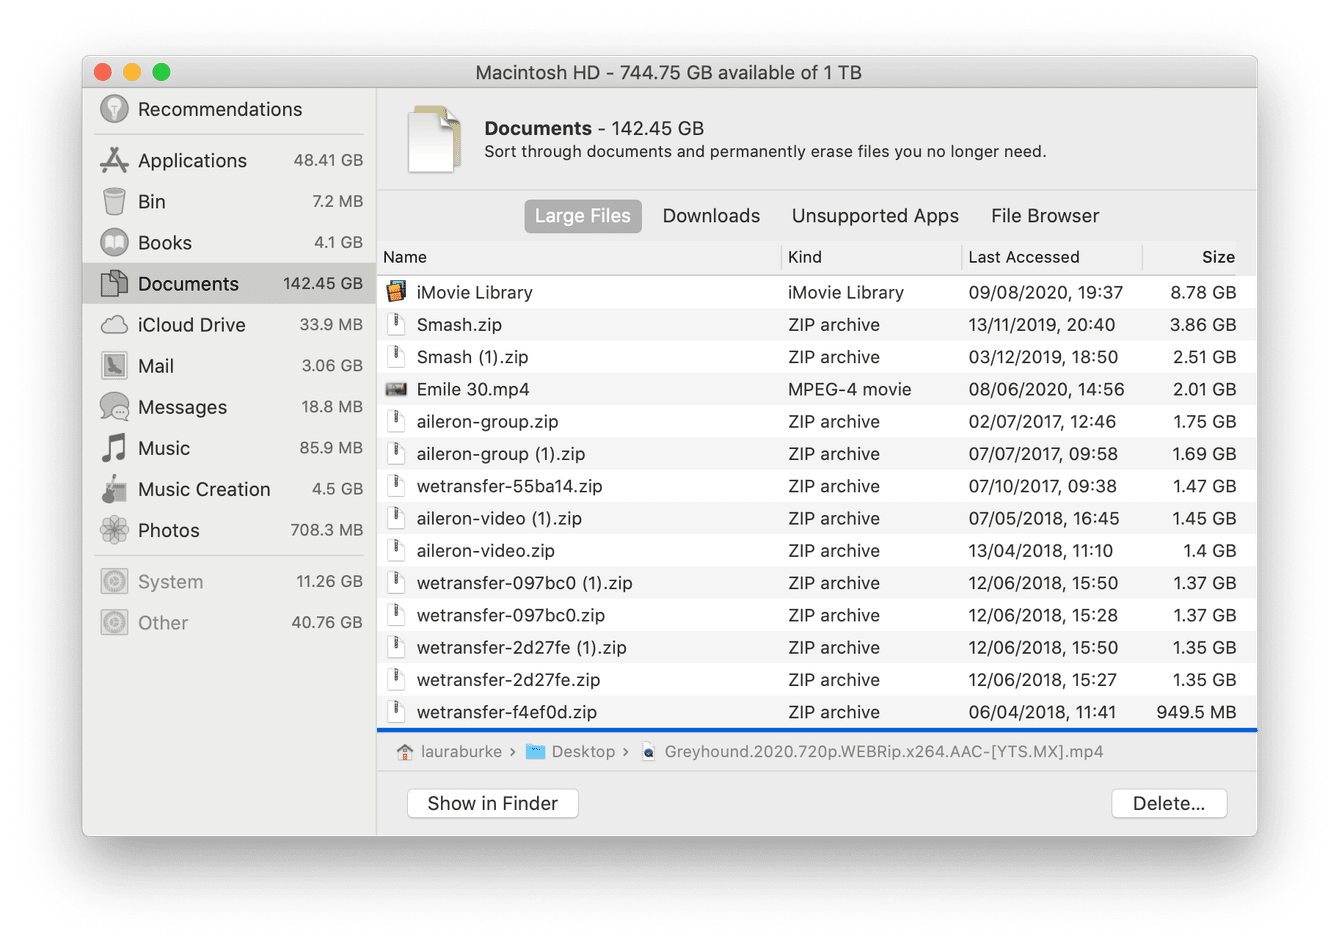 Mac HD storage window